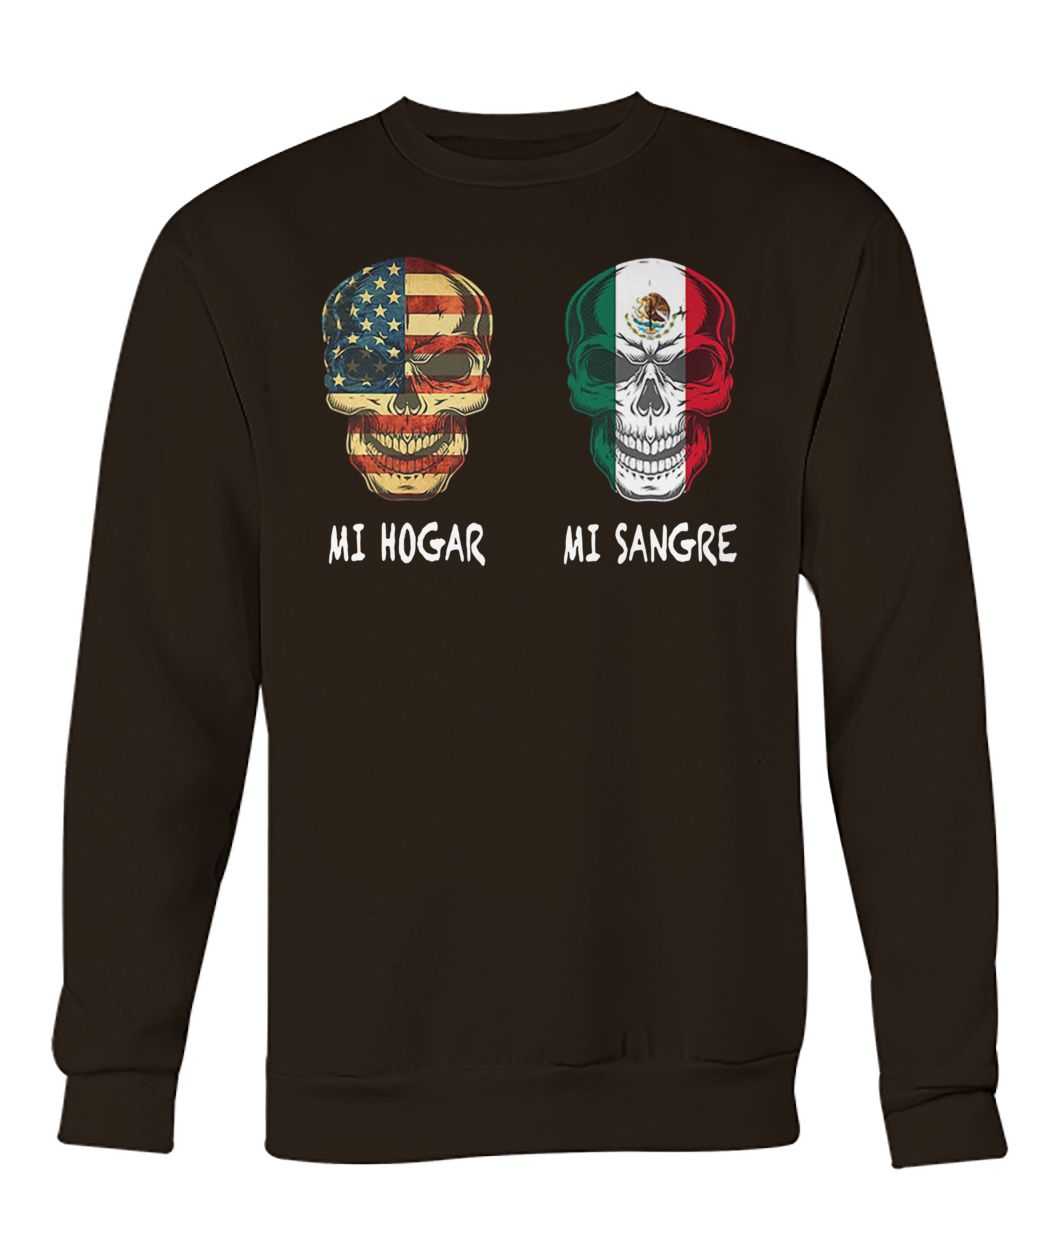 American flag skull mi hogar and mexico flag skull mi sangre crew neck sweatshirt